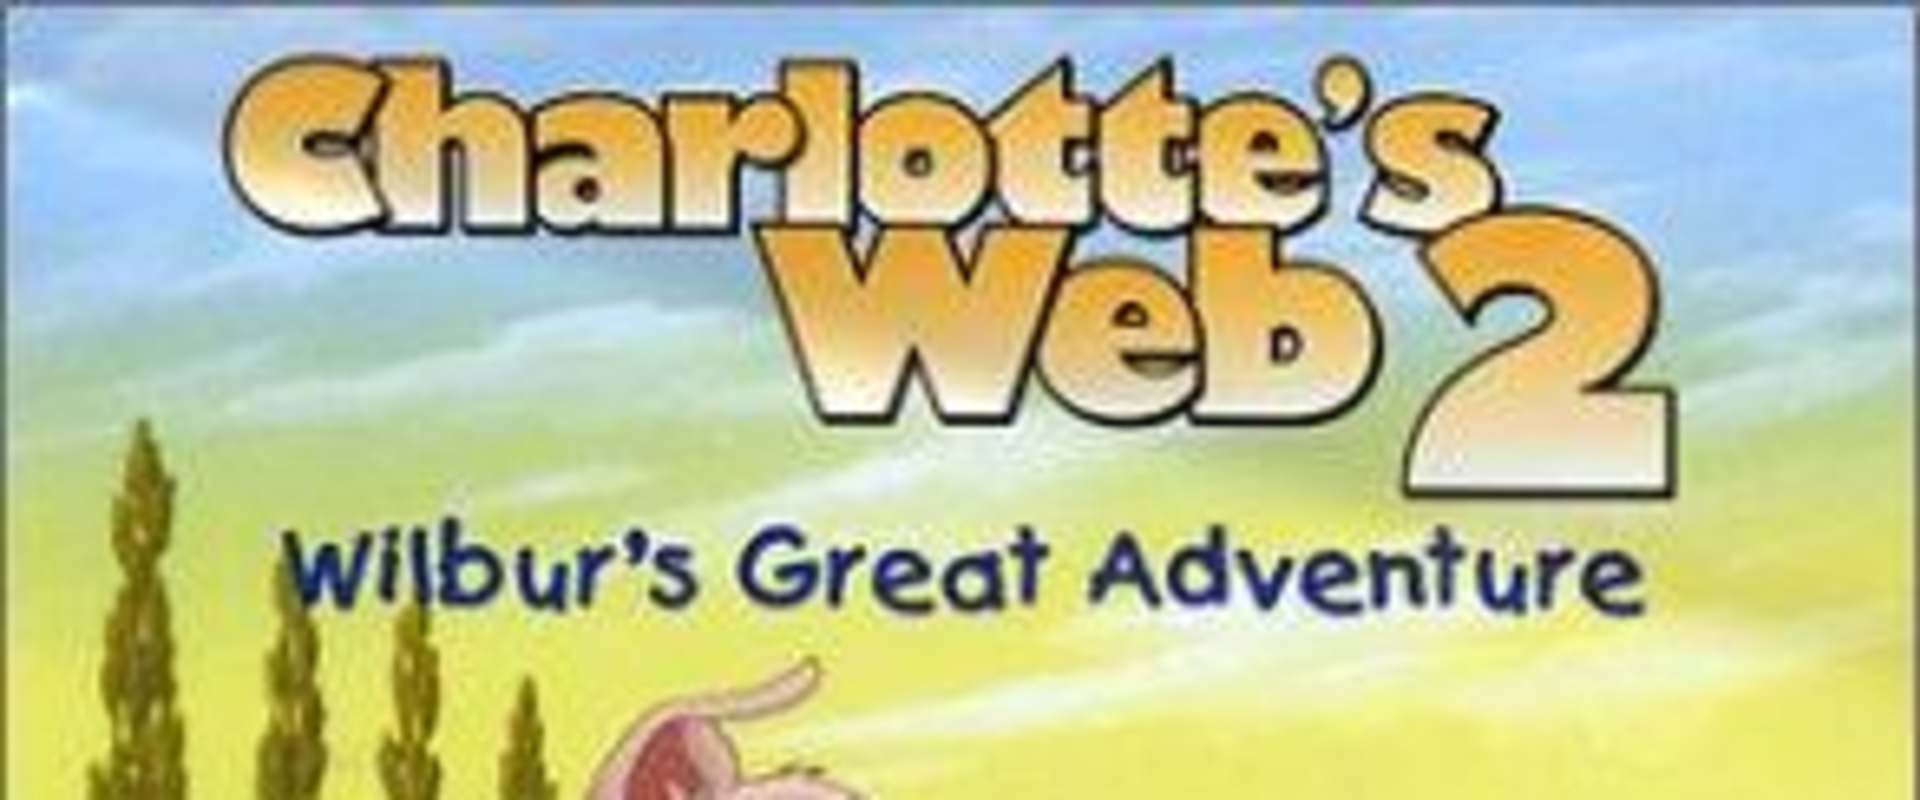 Charlotte's Web 2: Wilbur's Great Adventure background 2